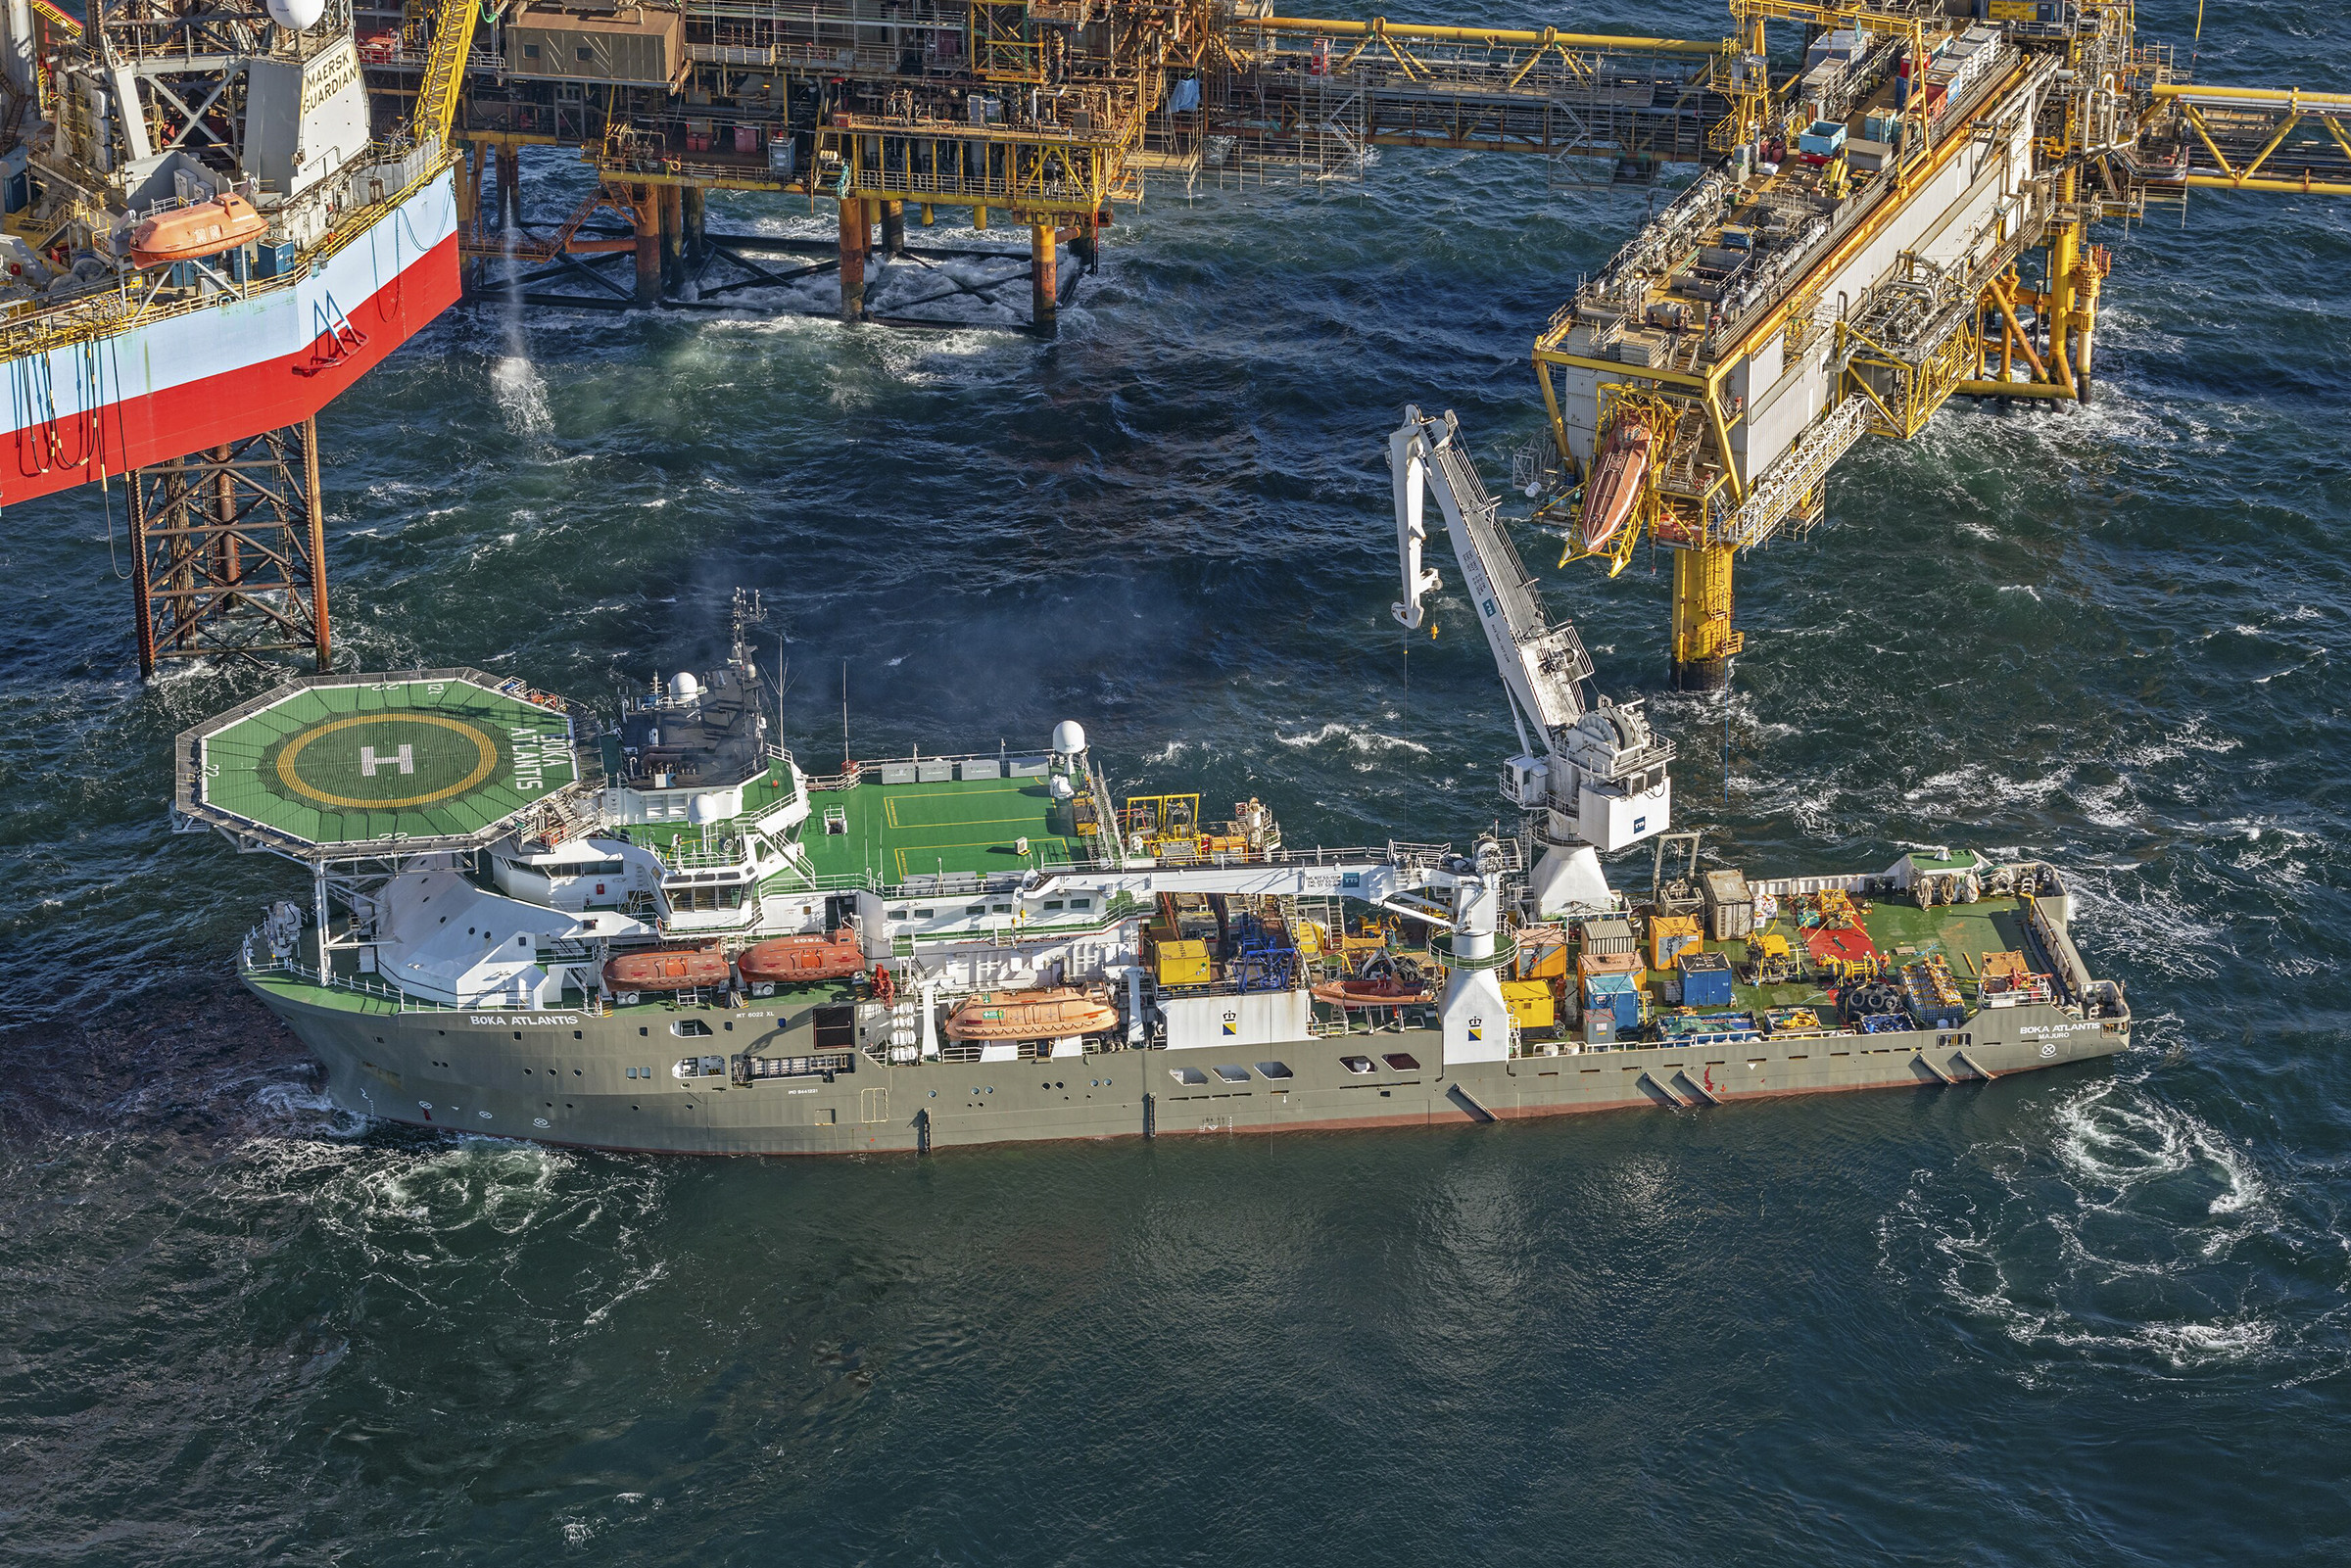 DSV BOKA Atlantis at work on the North Sea